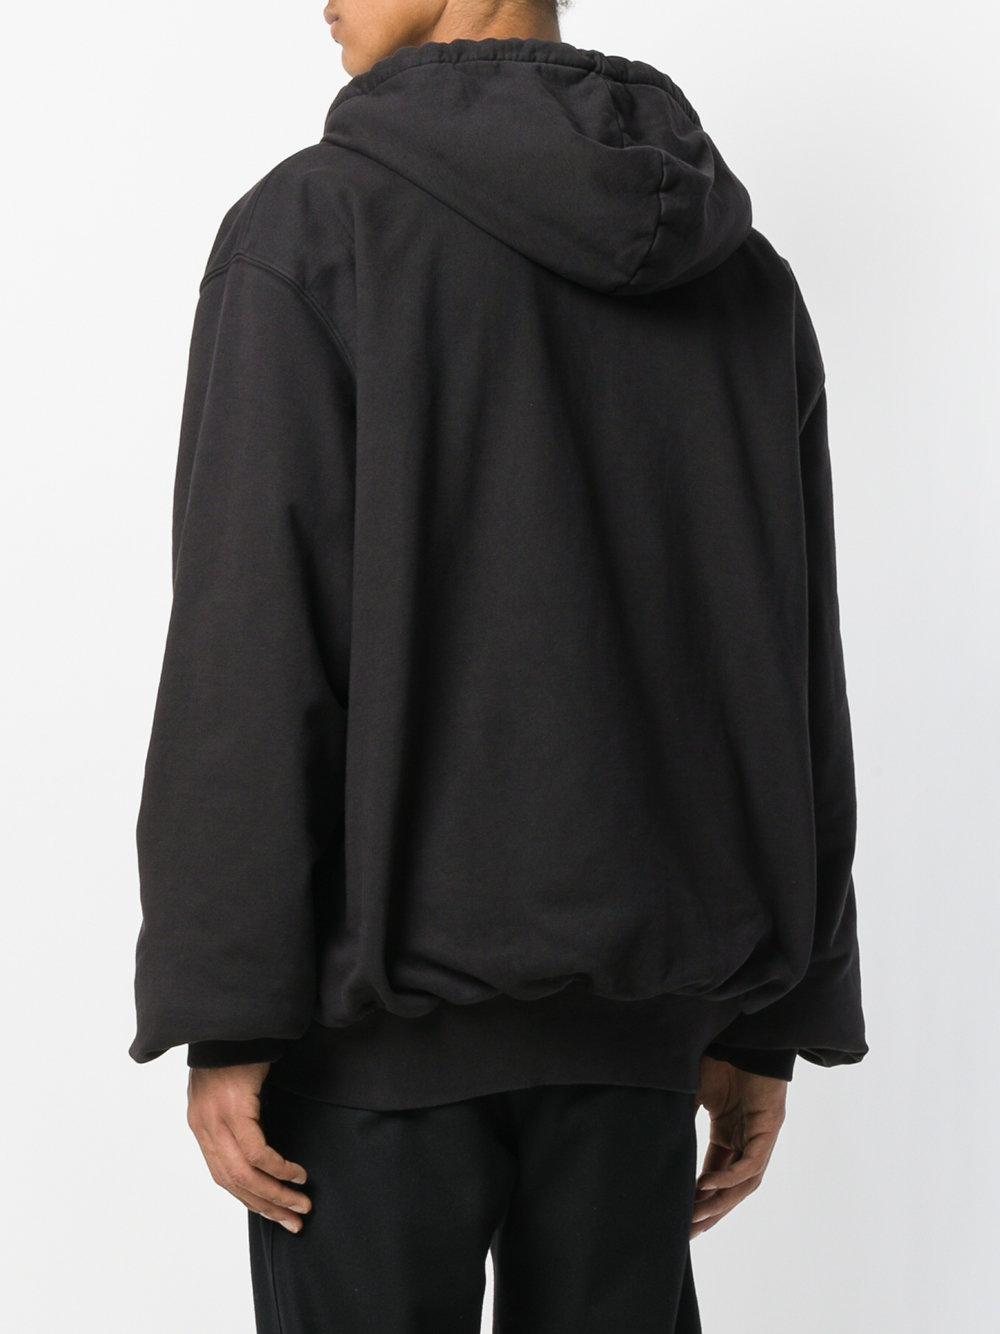 Yeezy Boxy Fit Zip Up Hoodie in Black for Men - Lyst